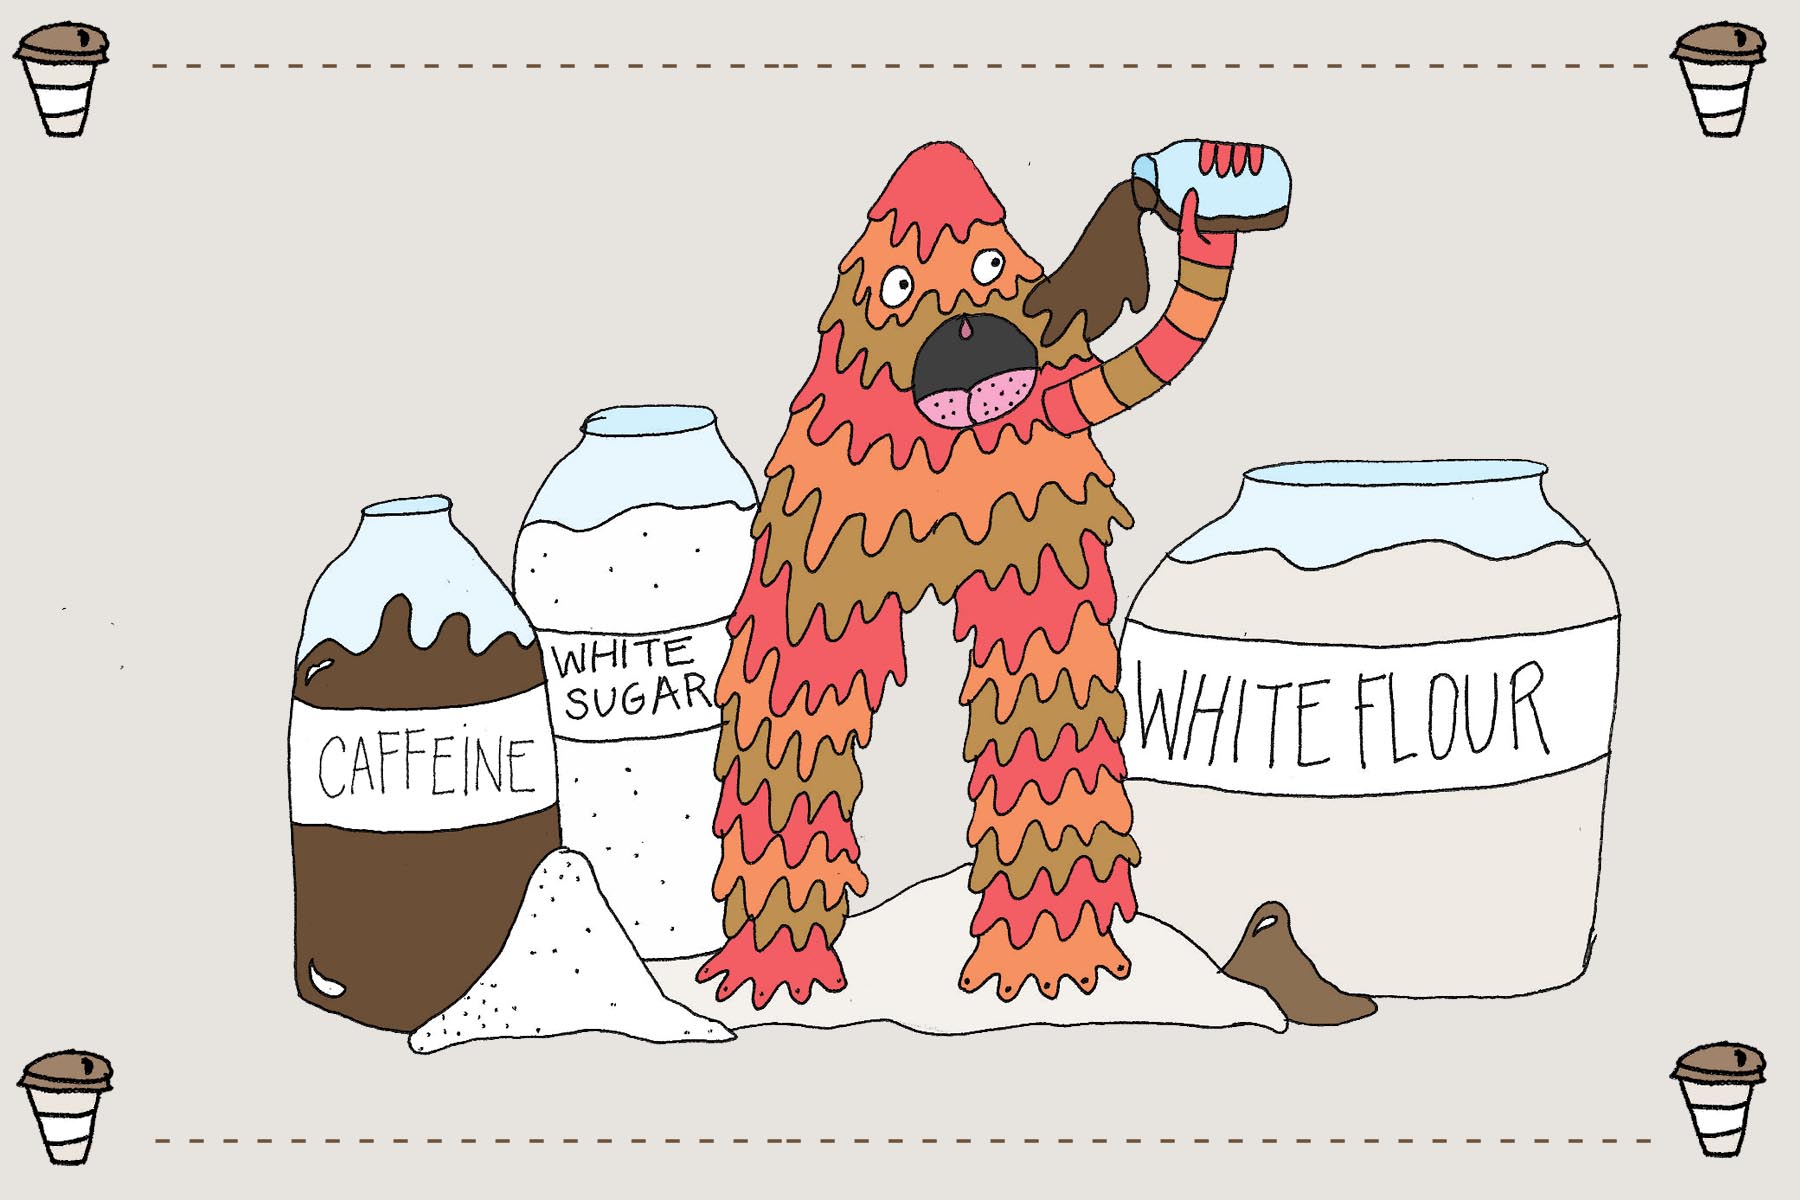 Acidic monster enjoying his favorite foods of caffeine, white flour and white sugar.